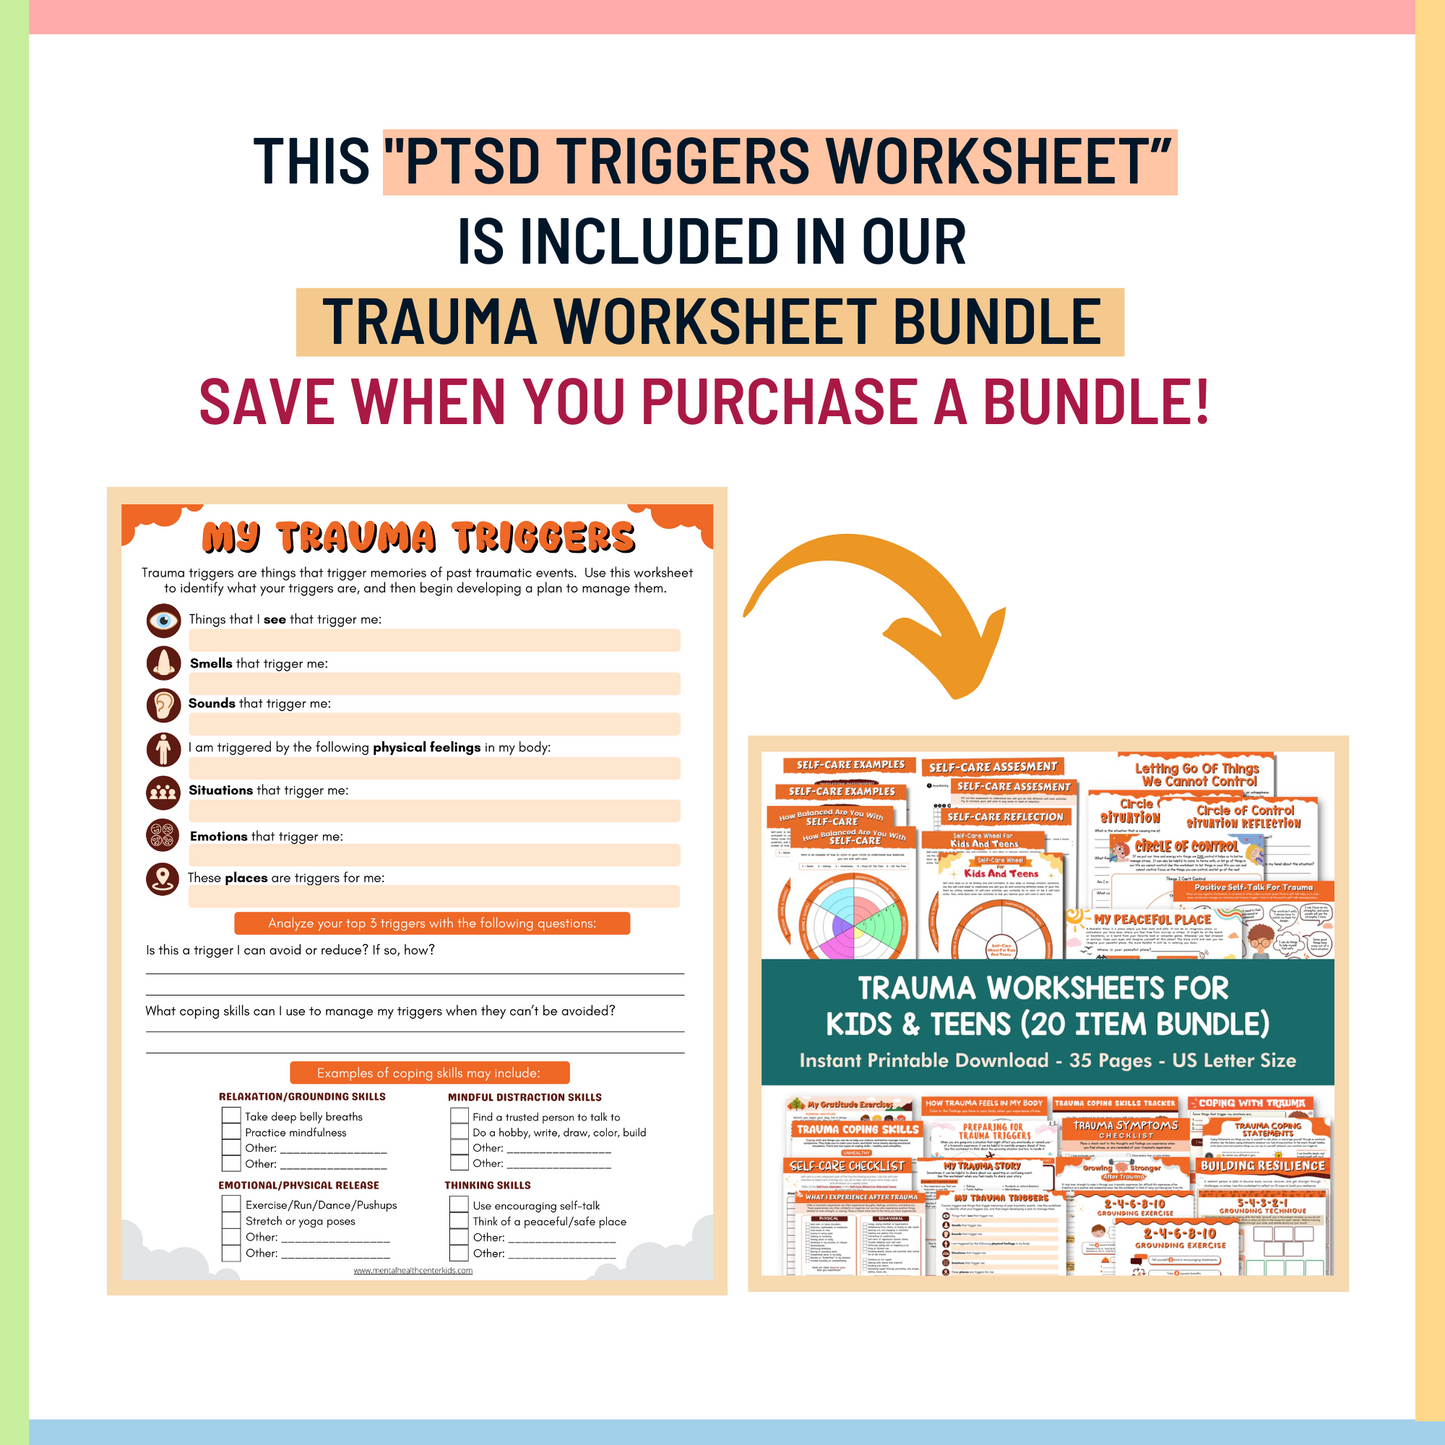 PTSD Triggers Worksheet